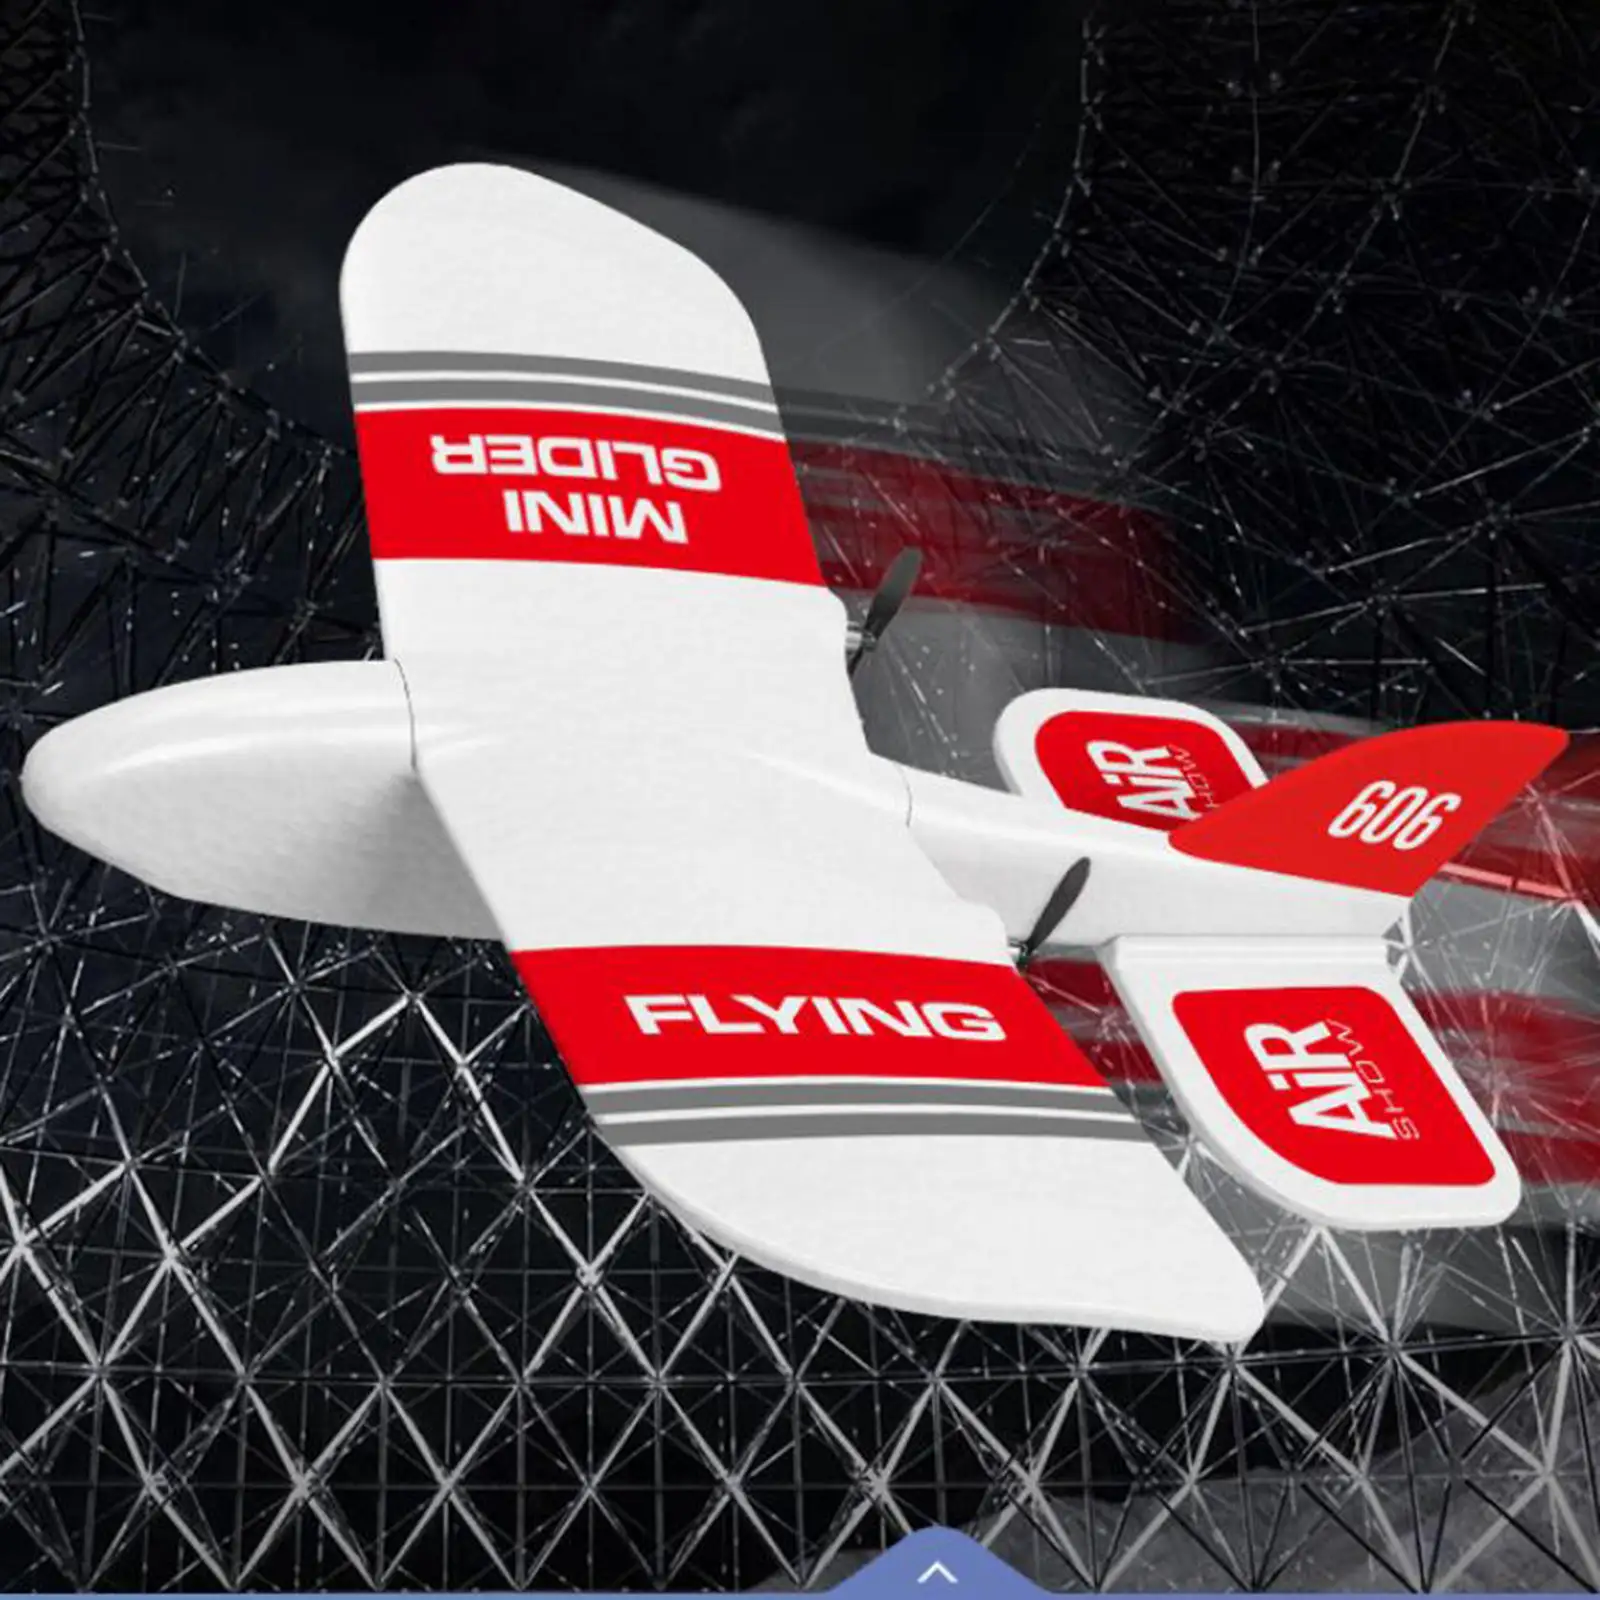 Foam Glider 2.4G Built-in Gyro 15 Mins Fligt Time Throwing DIY Gliding Aircraft Model Toy RC Airplane Foam Plane Toys for KF606